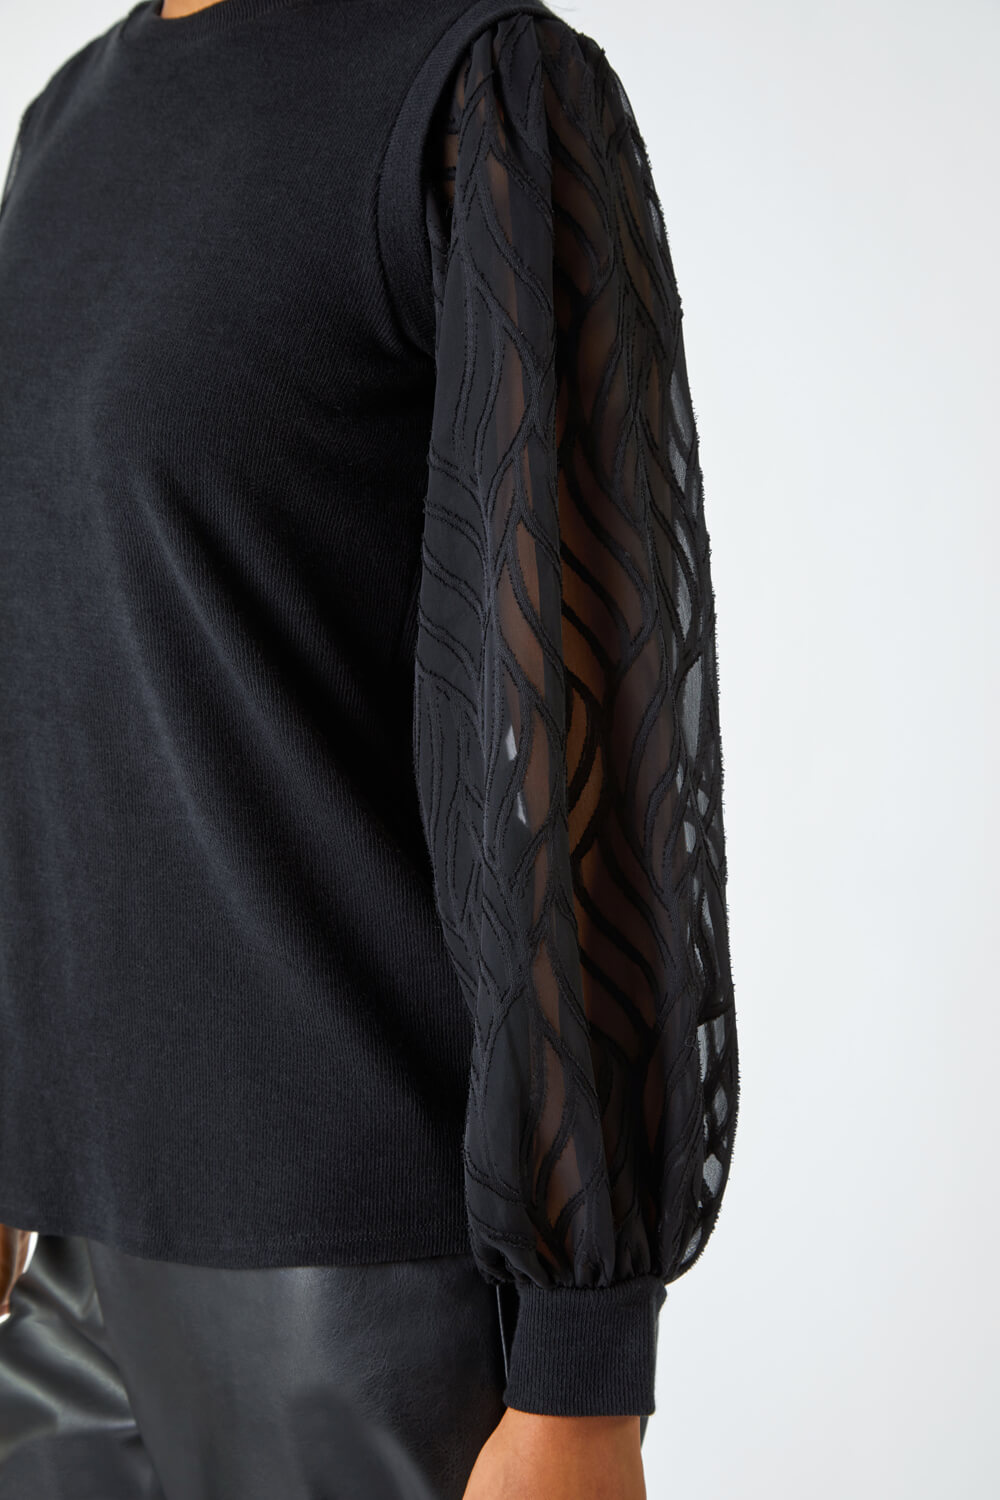 Black Chiffon Sleeve Overlay Stretch Top, Image 5 of 5